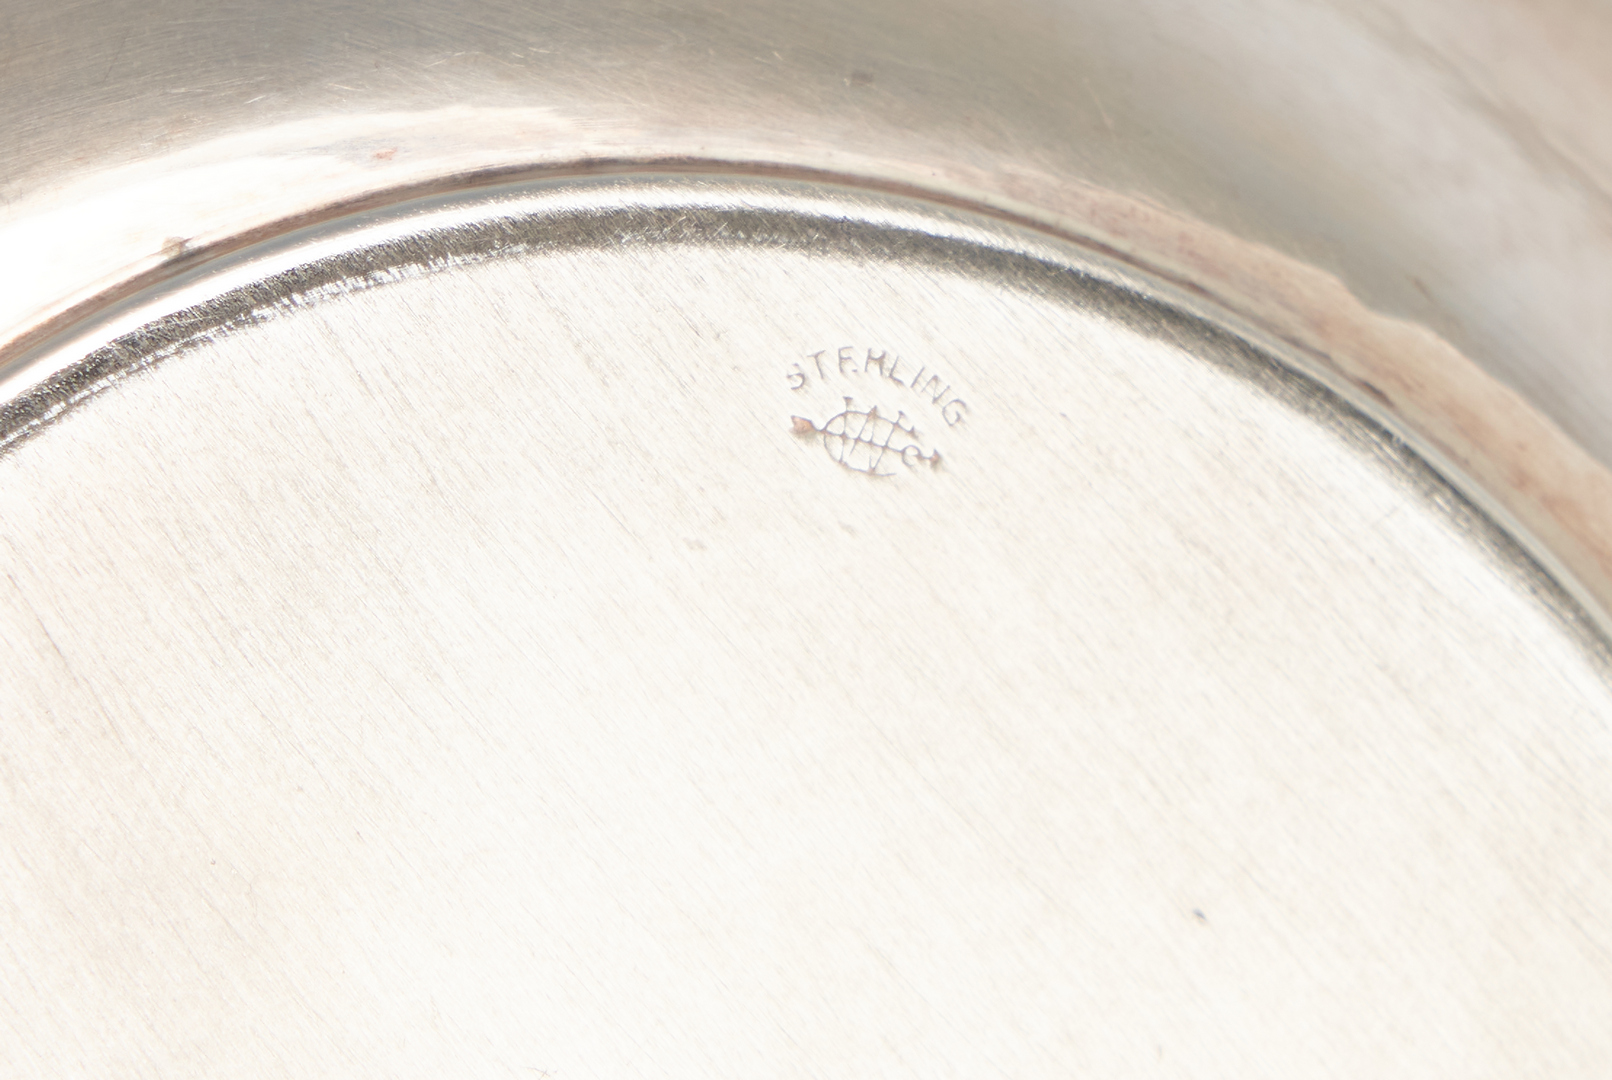 Lot 781: 9 Sterling Hollowware Bowls, incl. Gorham